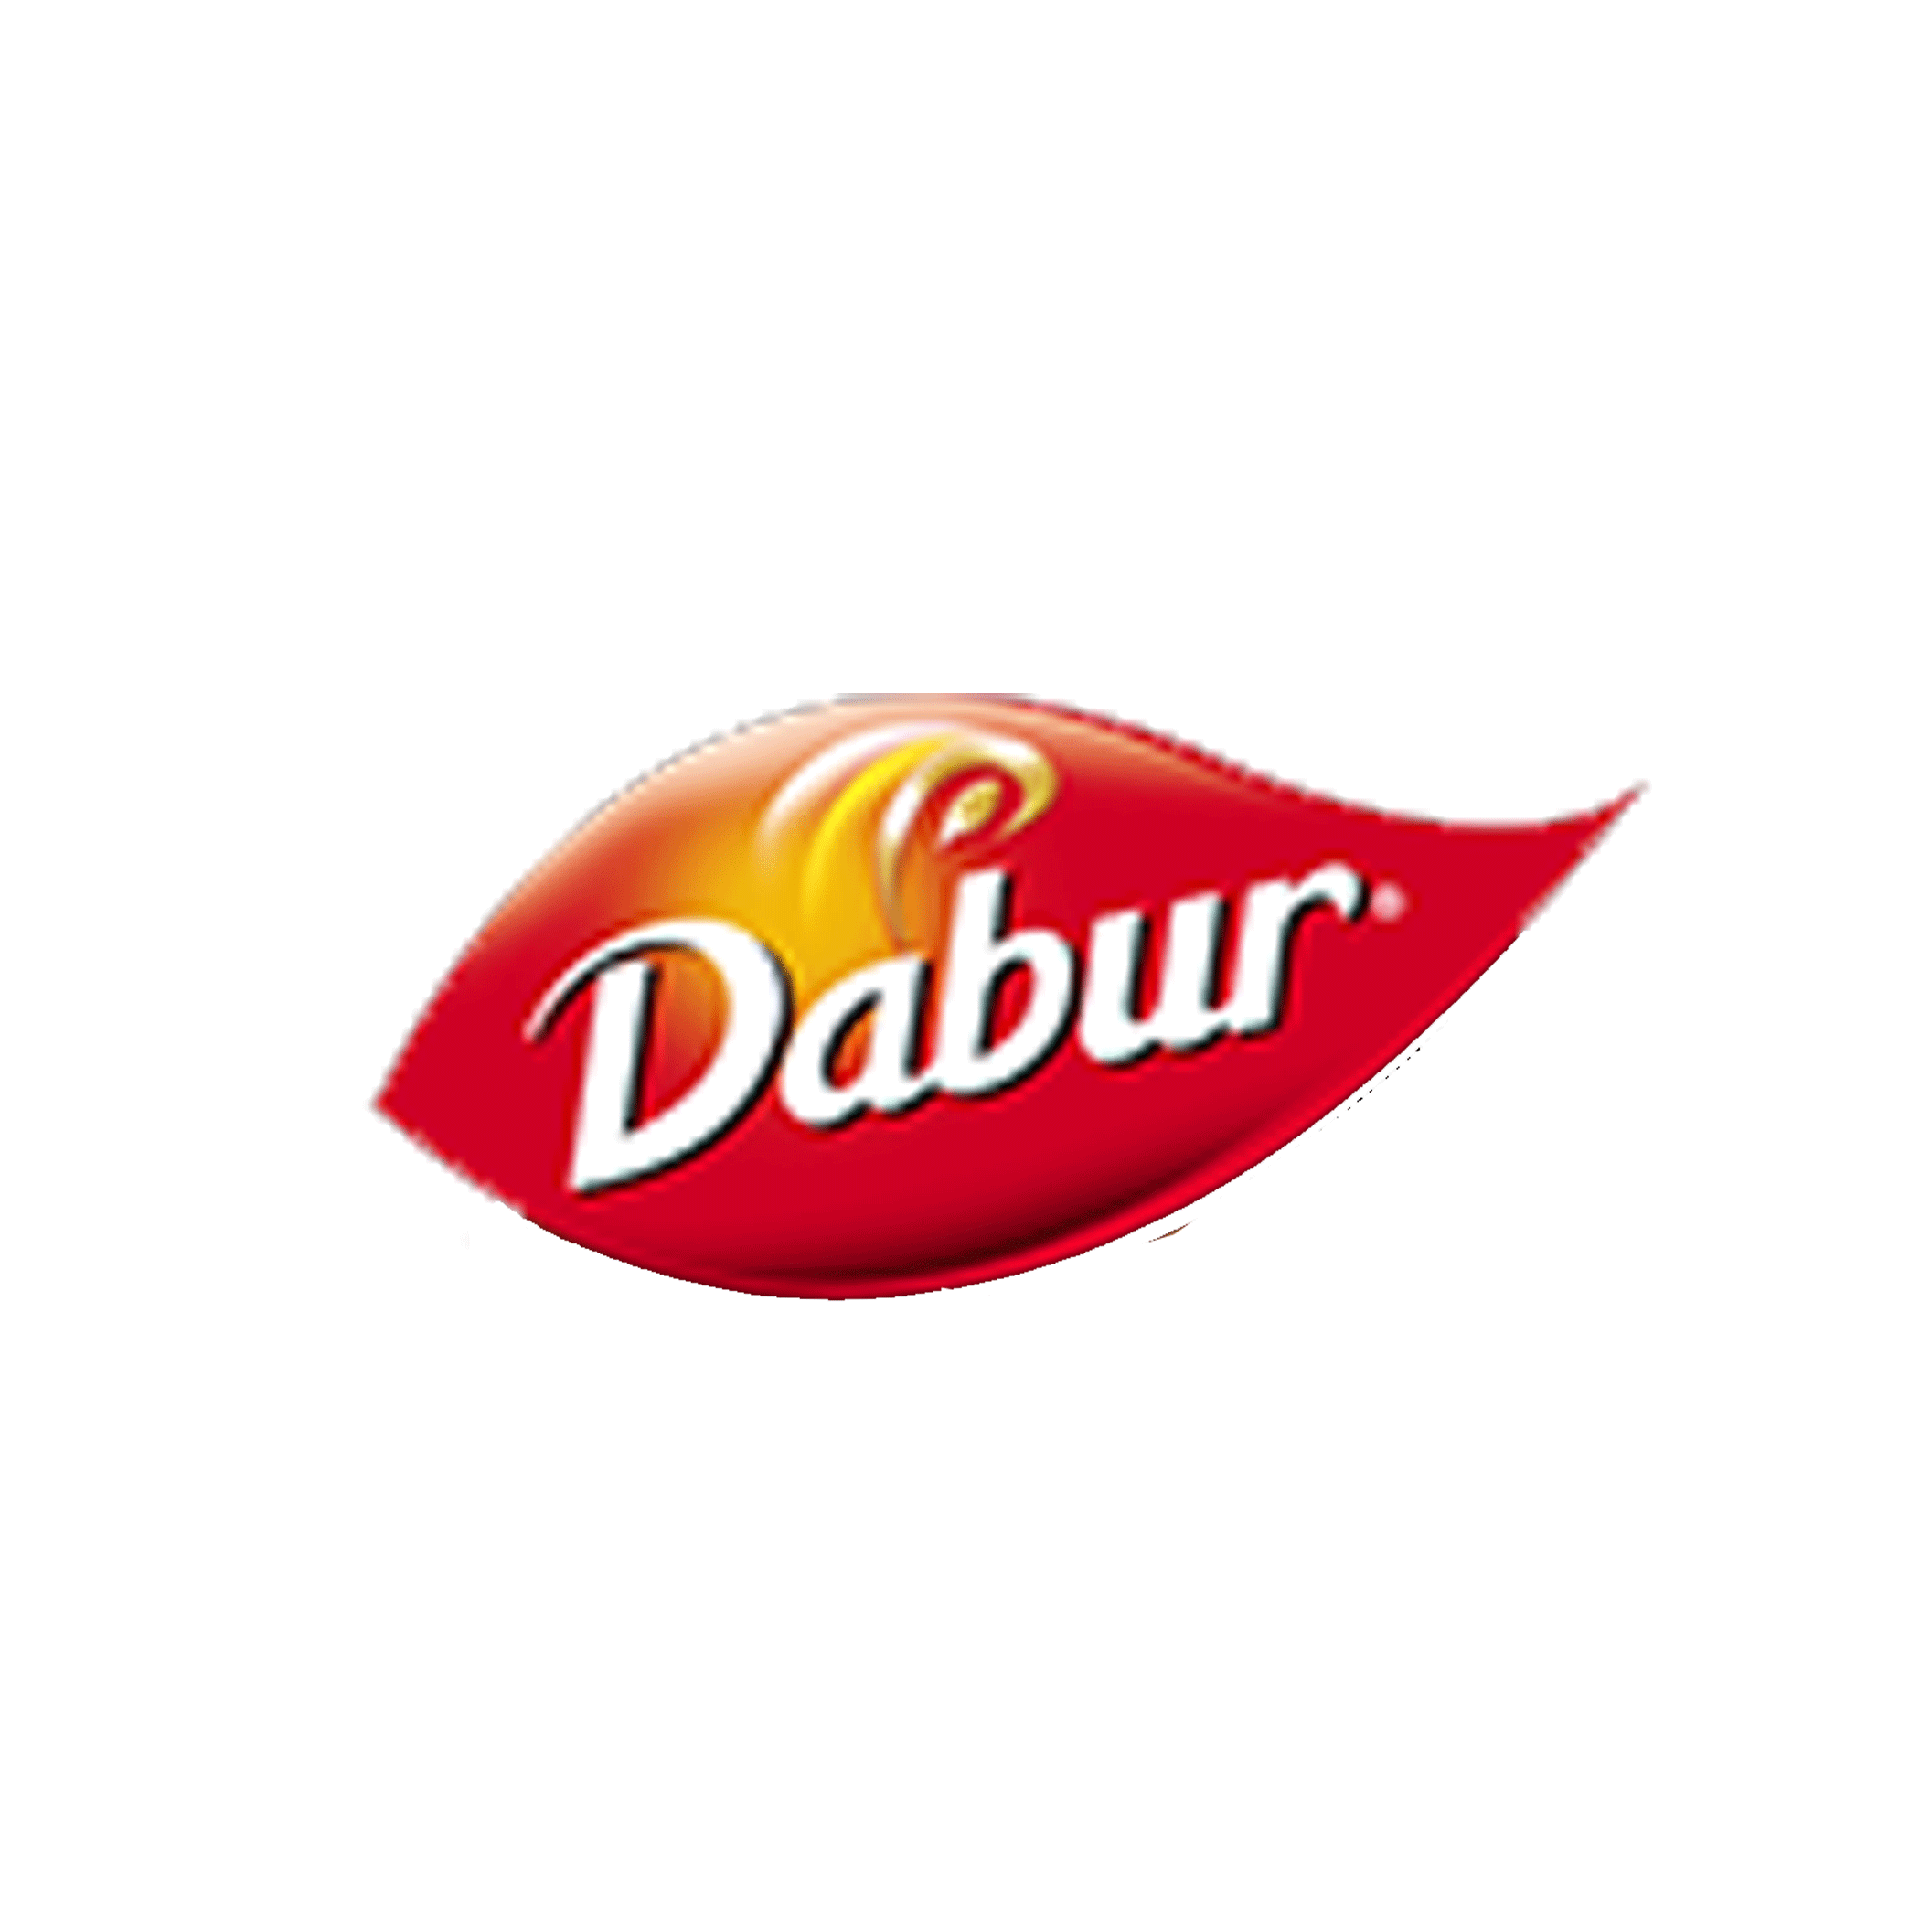 Product Brand: Dabur